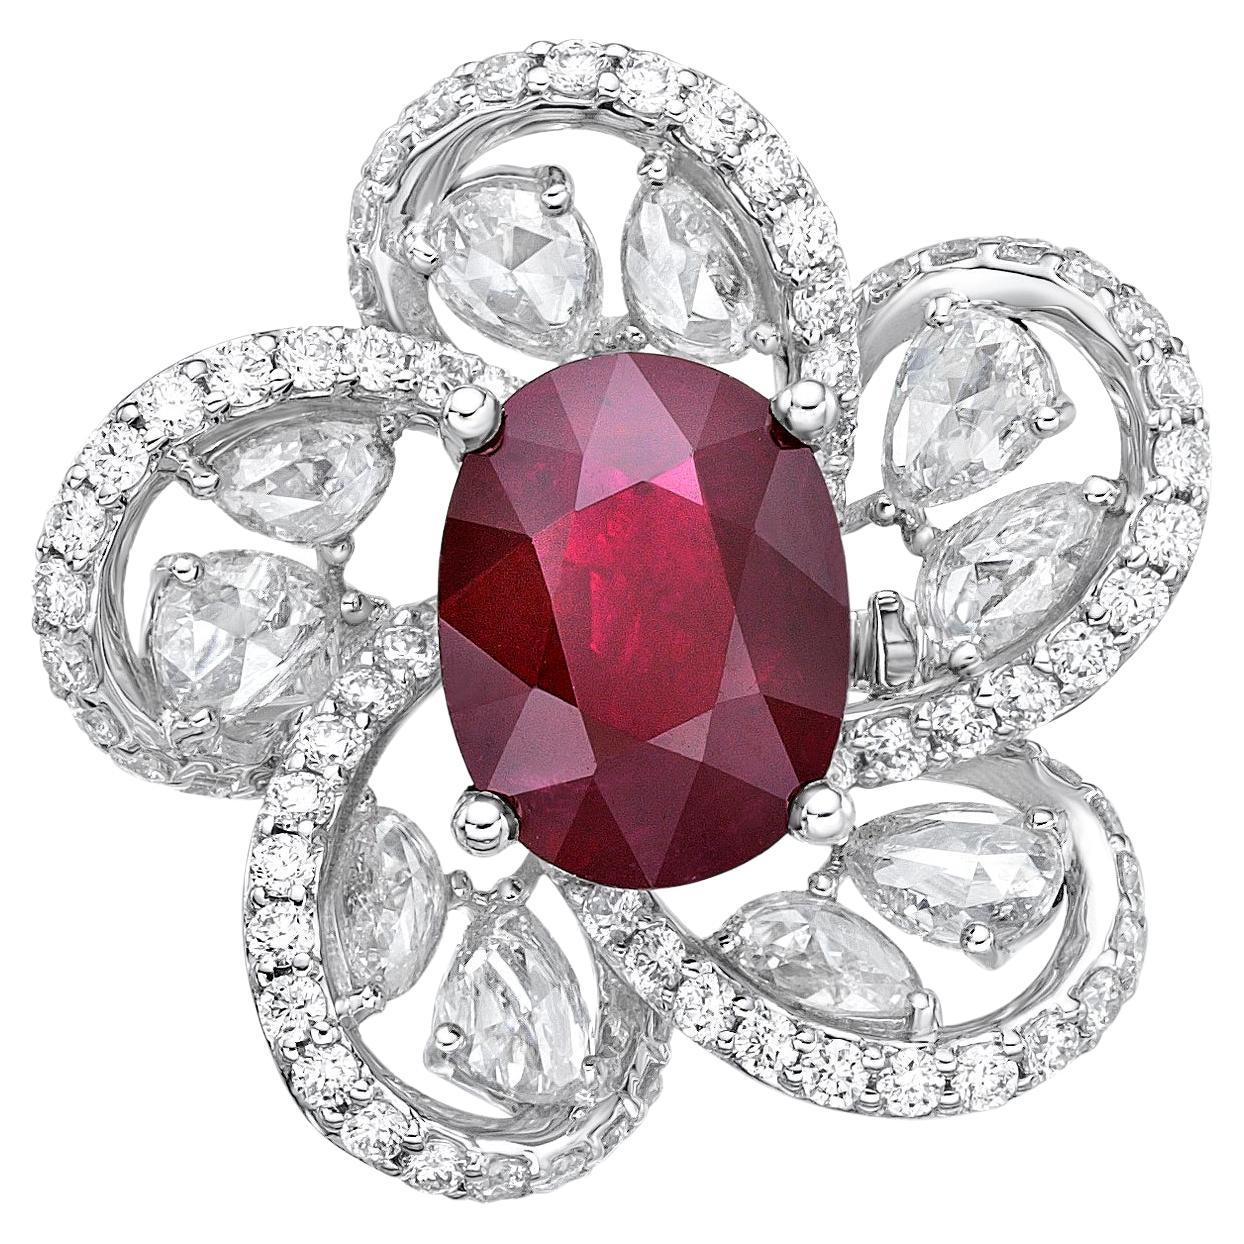 GRS Certified 3.29 Carat Ruby and Diamond Ring in 18 Karat White Gold